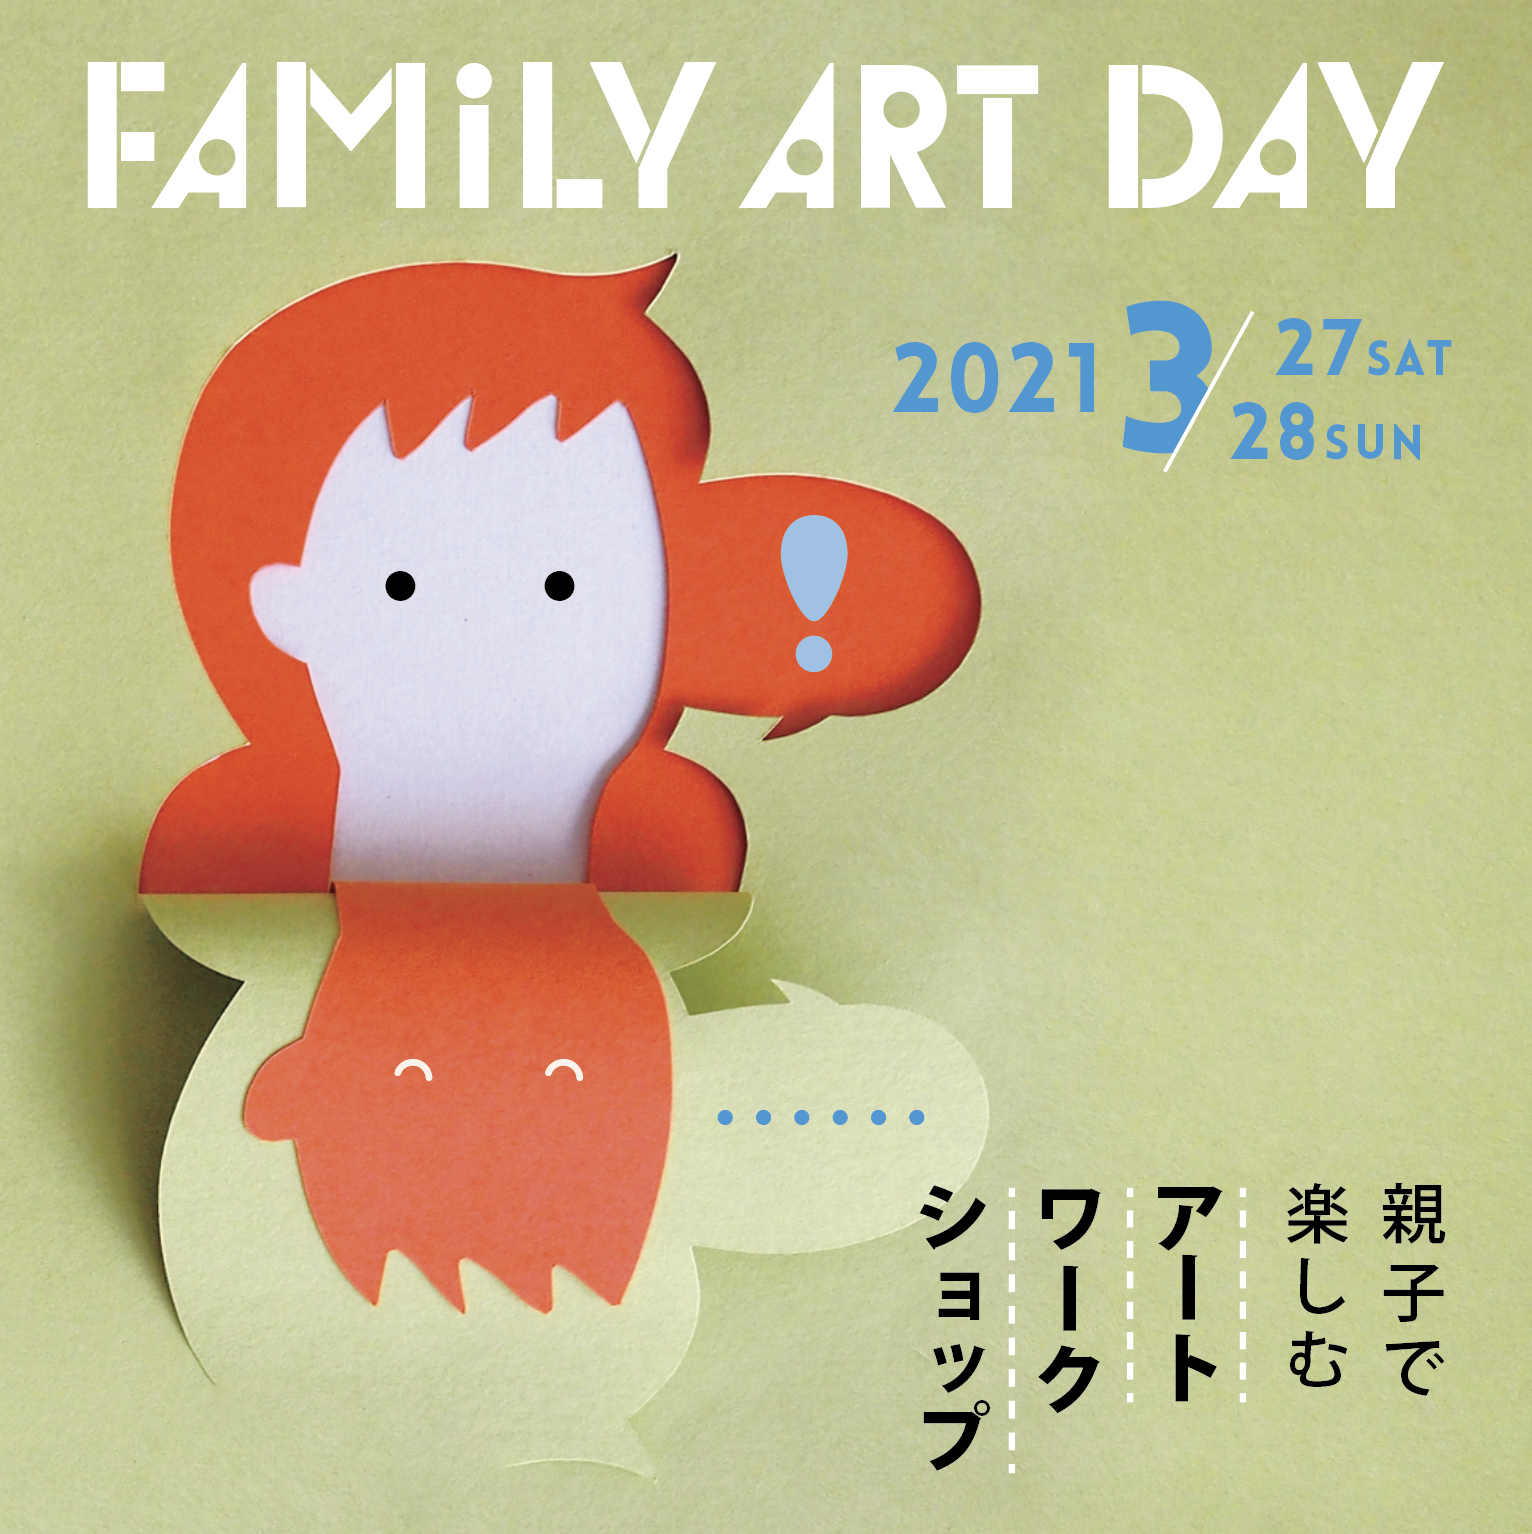 Family Art Day 21 親子で楽しむアートワークショップ イベント情報 札幌市民交流プラザ